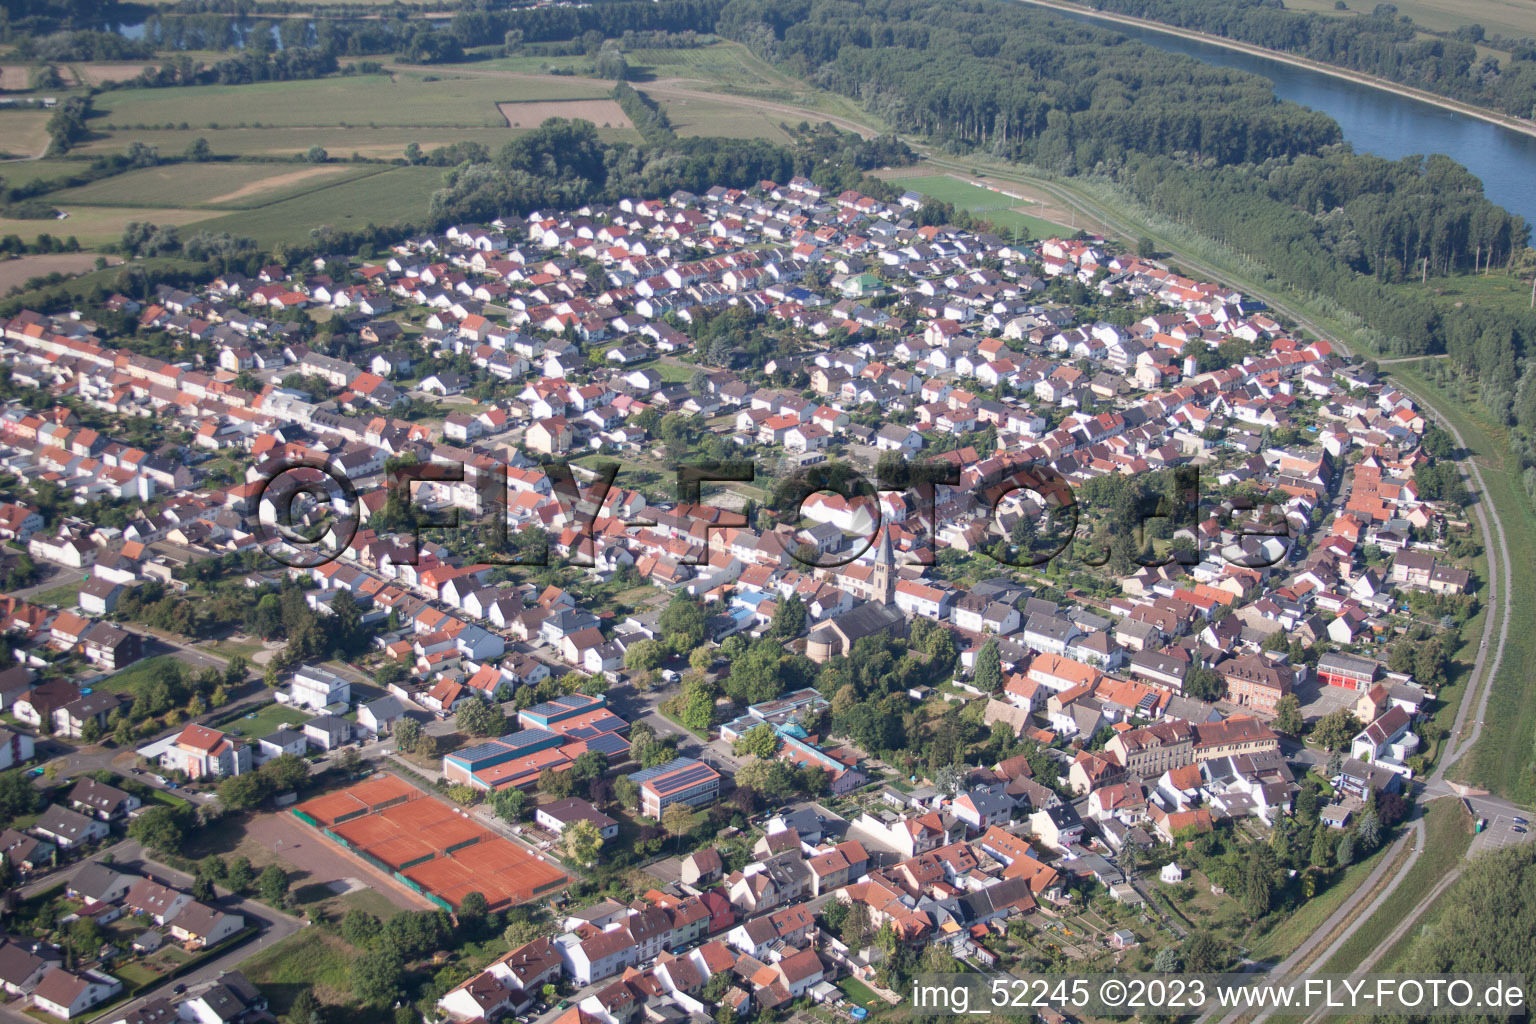 District Rheinhausen in Oberhausen-Rheinhausen in the state Baden-Wuerttemberg, Germany out of the air